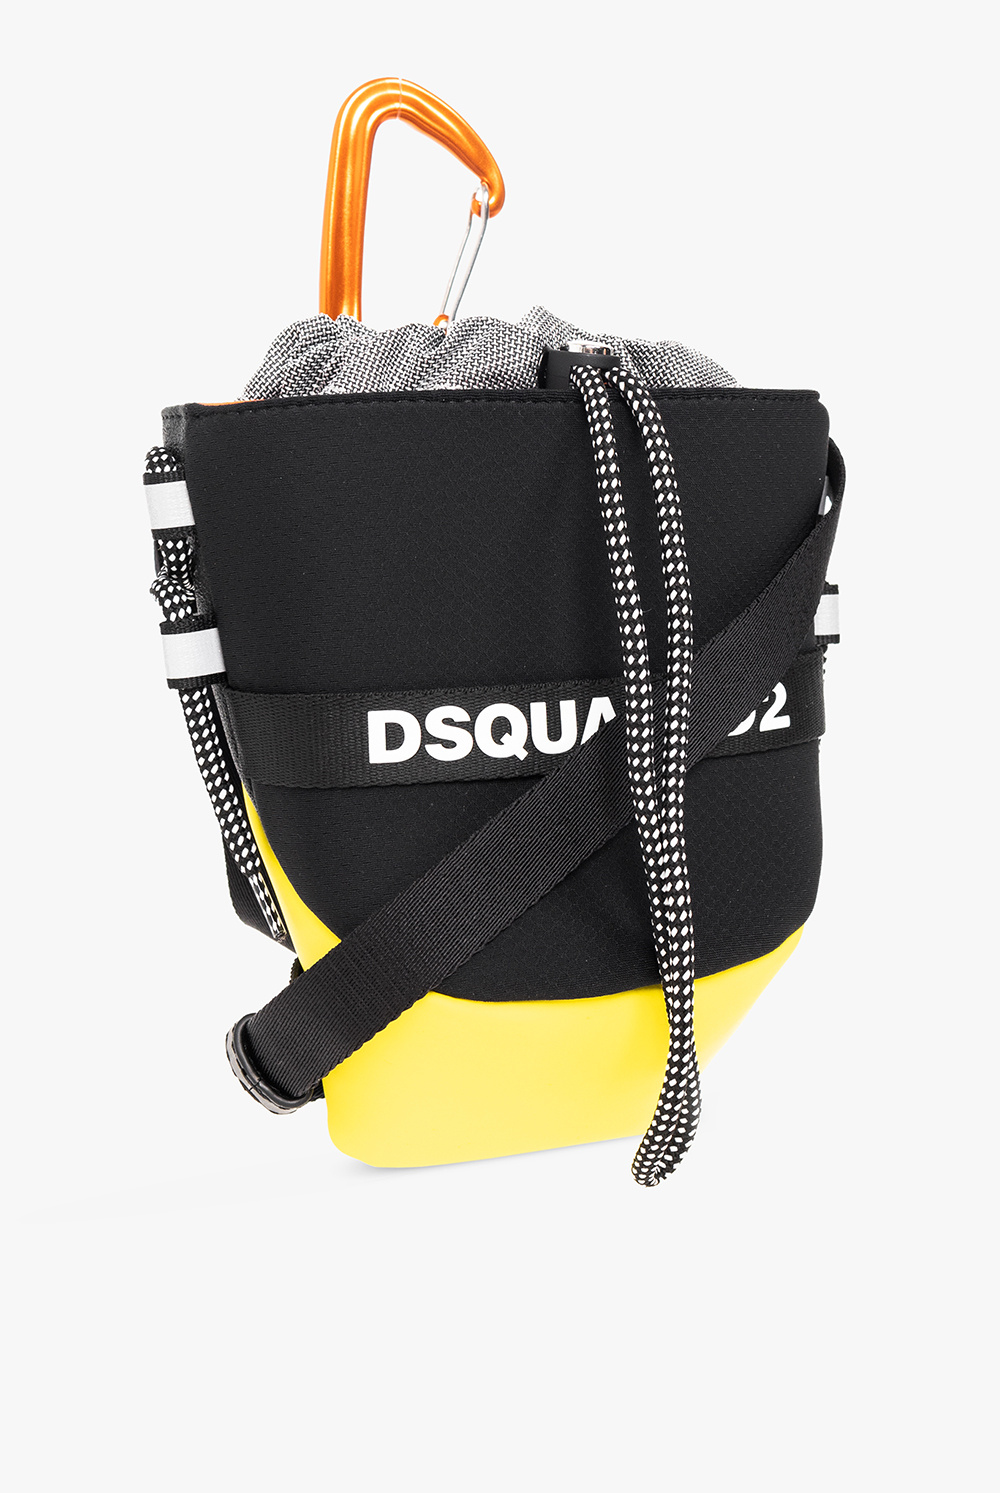 Dsquared2 Salvatore Ferragamo bow-detail textured-finish shoulder bag